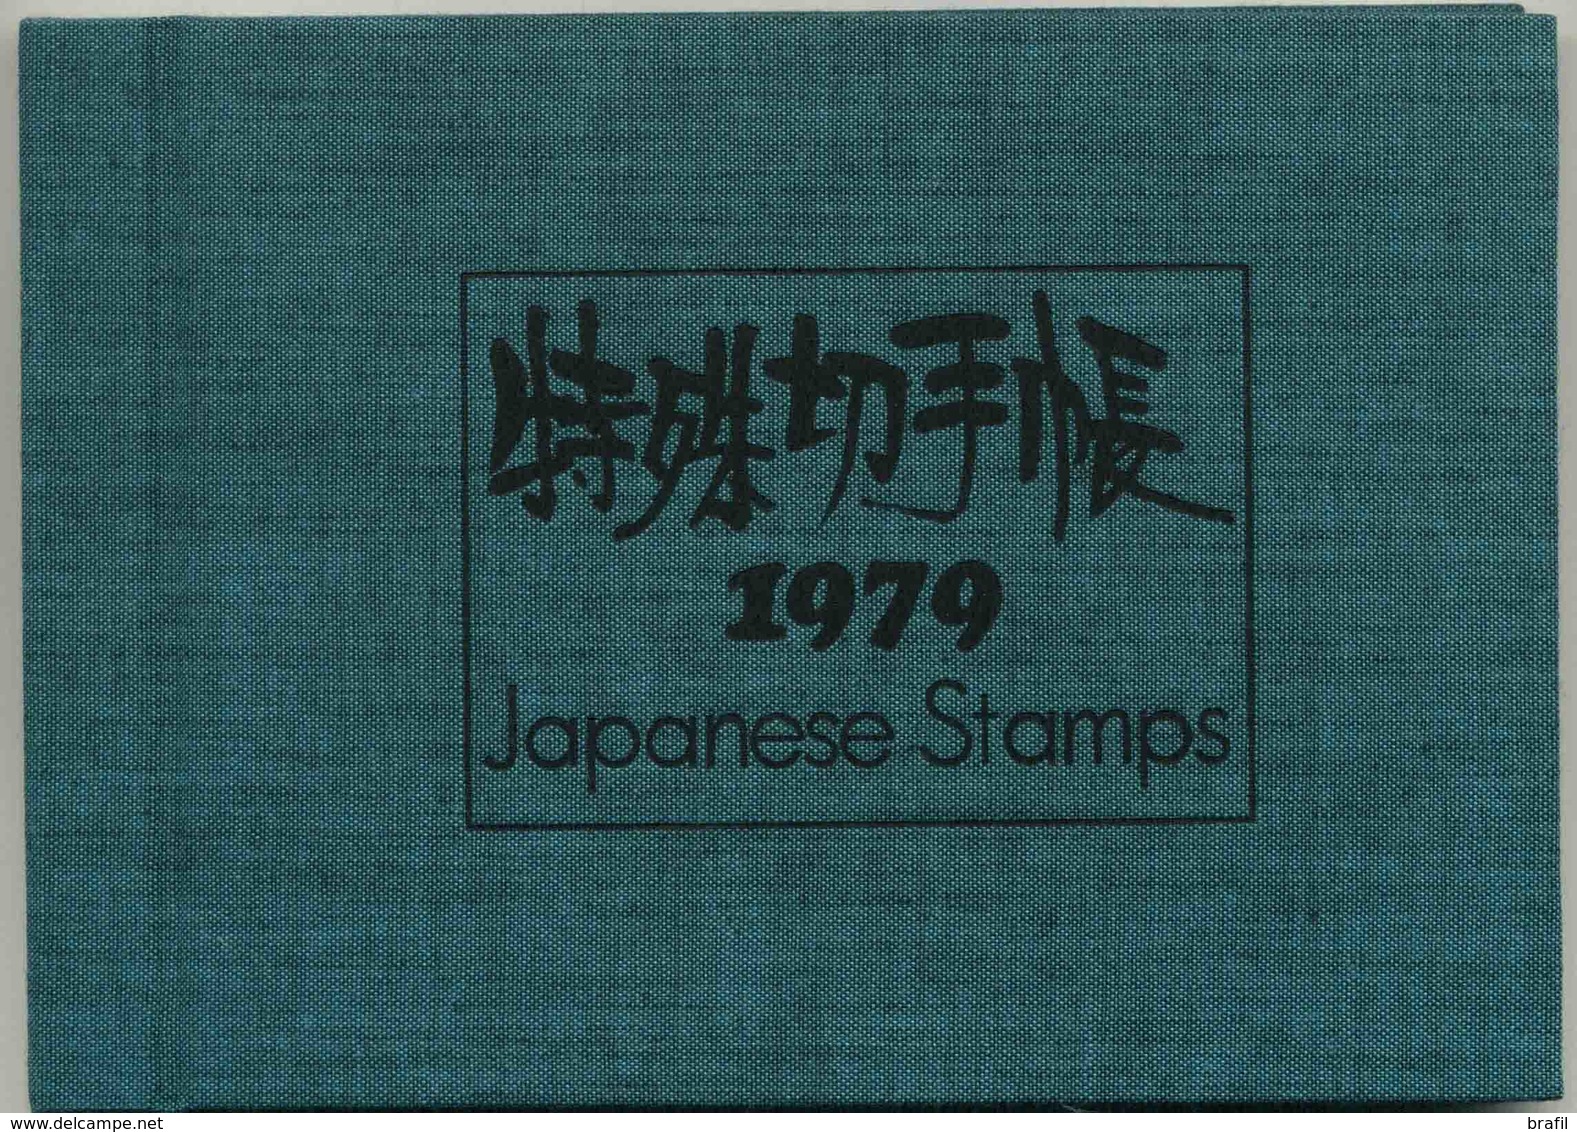 1979 Giappone, Libro Raccoglitore Francobolli Nuovi (**) Annata Completa - Volledig Jaar